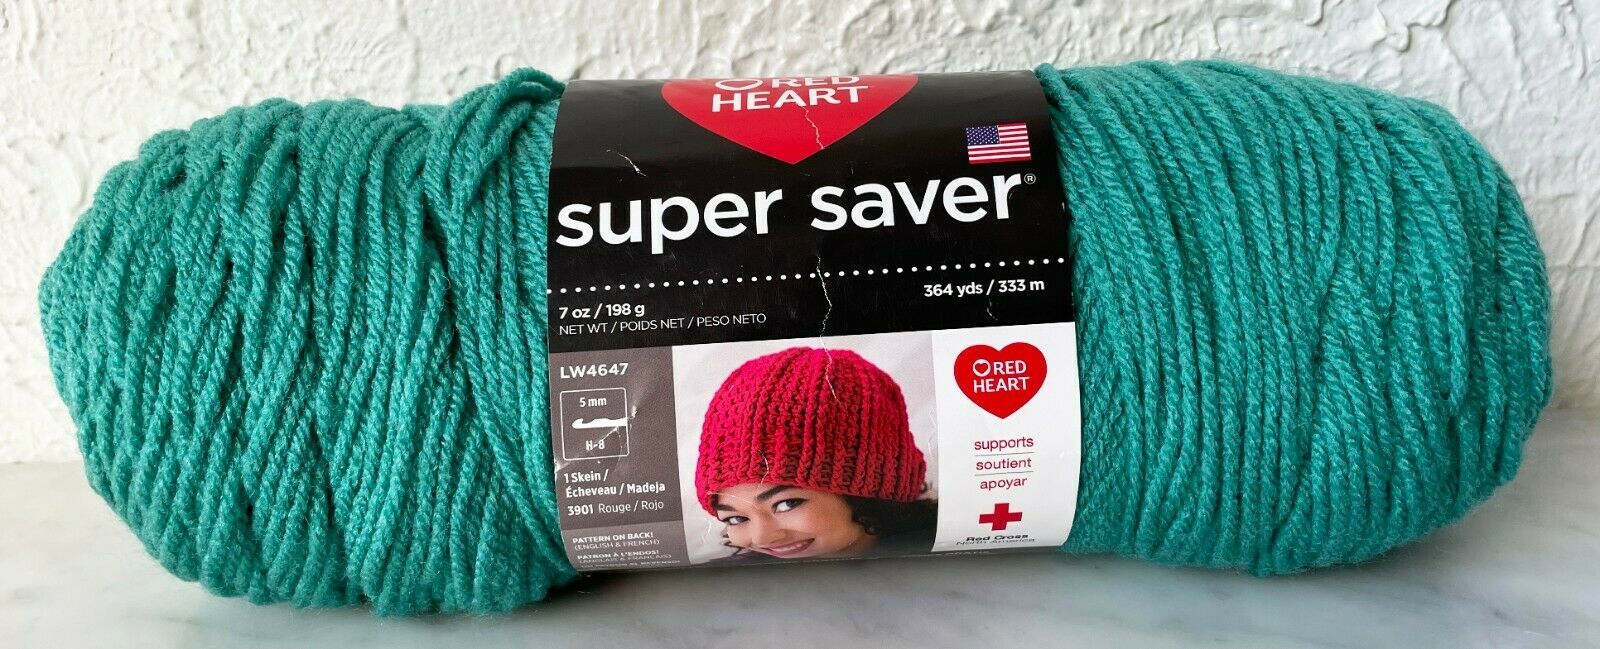 Red Heart Super Saver Turqua Yarn - 3 Pack of 198g/7oz - Acrylic - 4 Medium  (Worsted) - 364 Yards - Knitting/Crochet